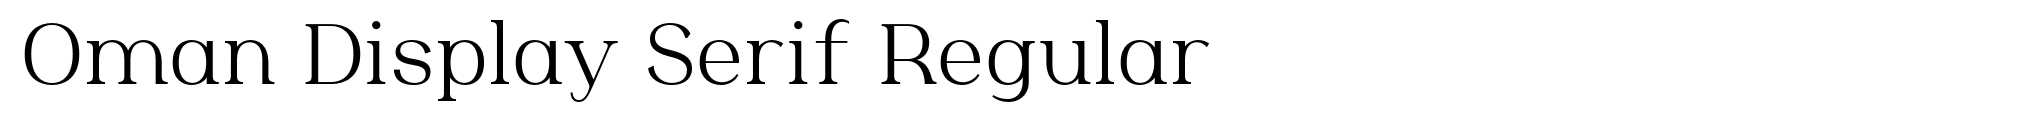 Oman Display Serif Regular image